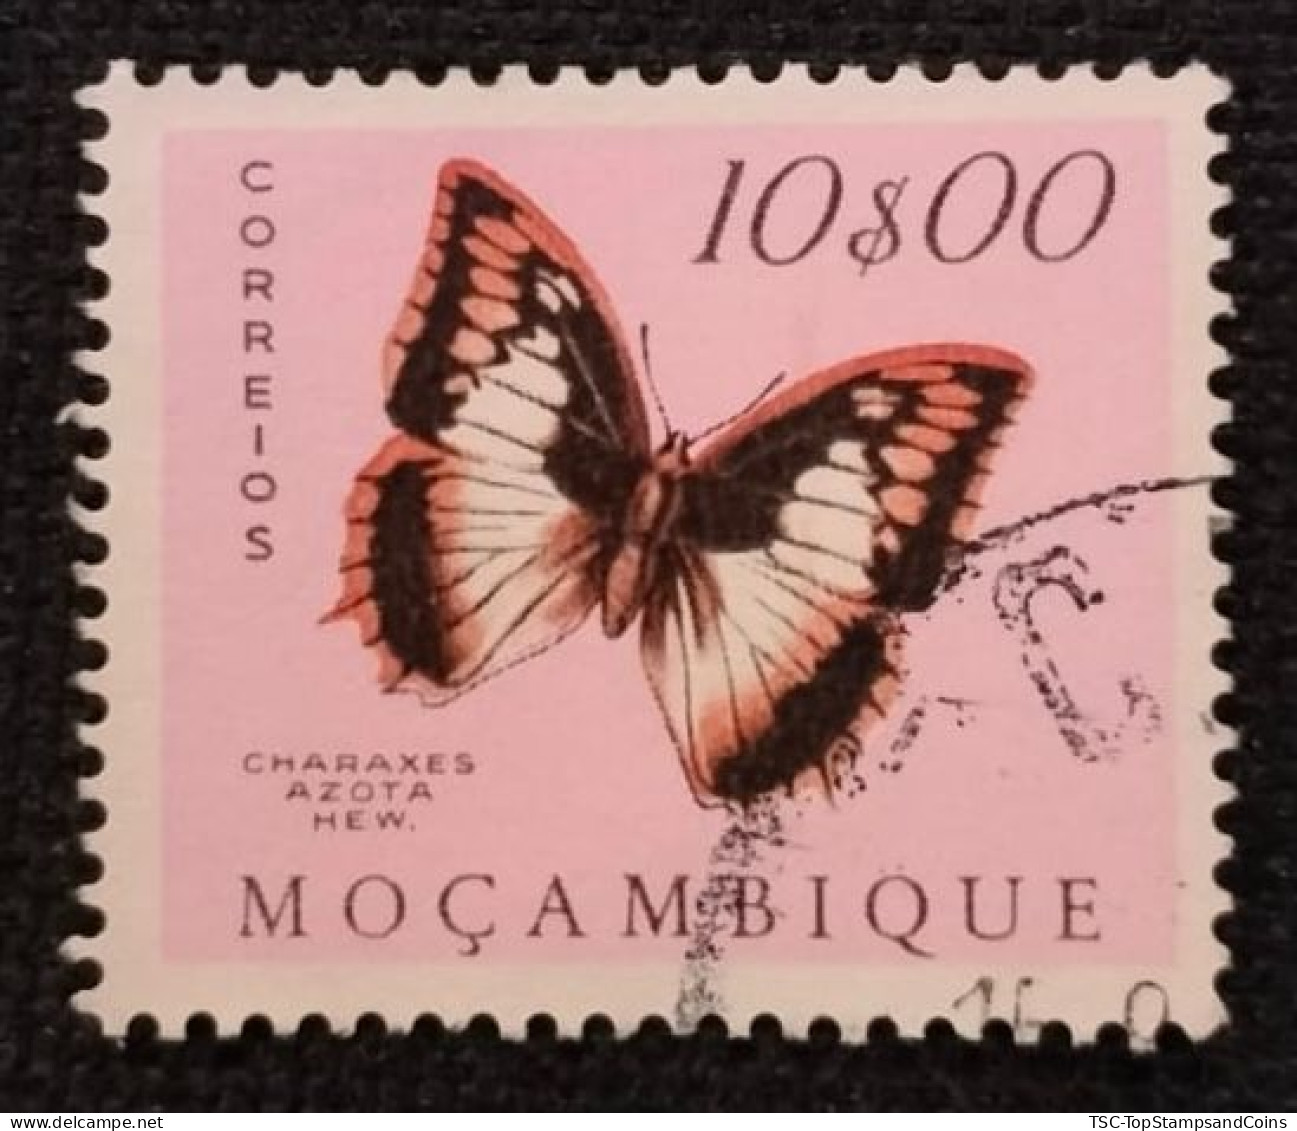 MOZPO0406U9 - Mozambique Butterflies - 10$00 Used Stamp - Mozambique - 1953 - Mosambik